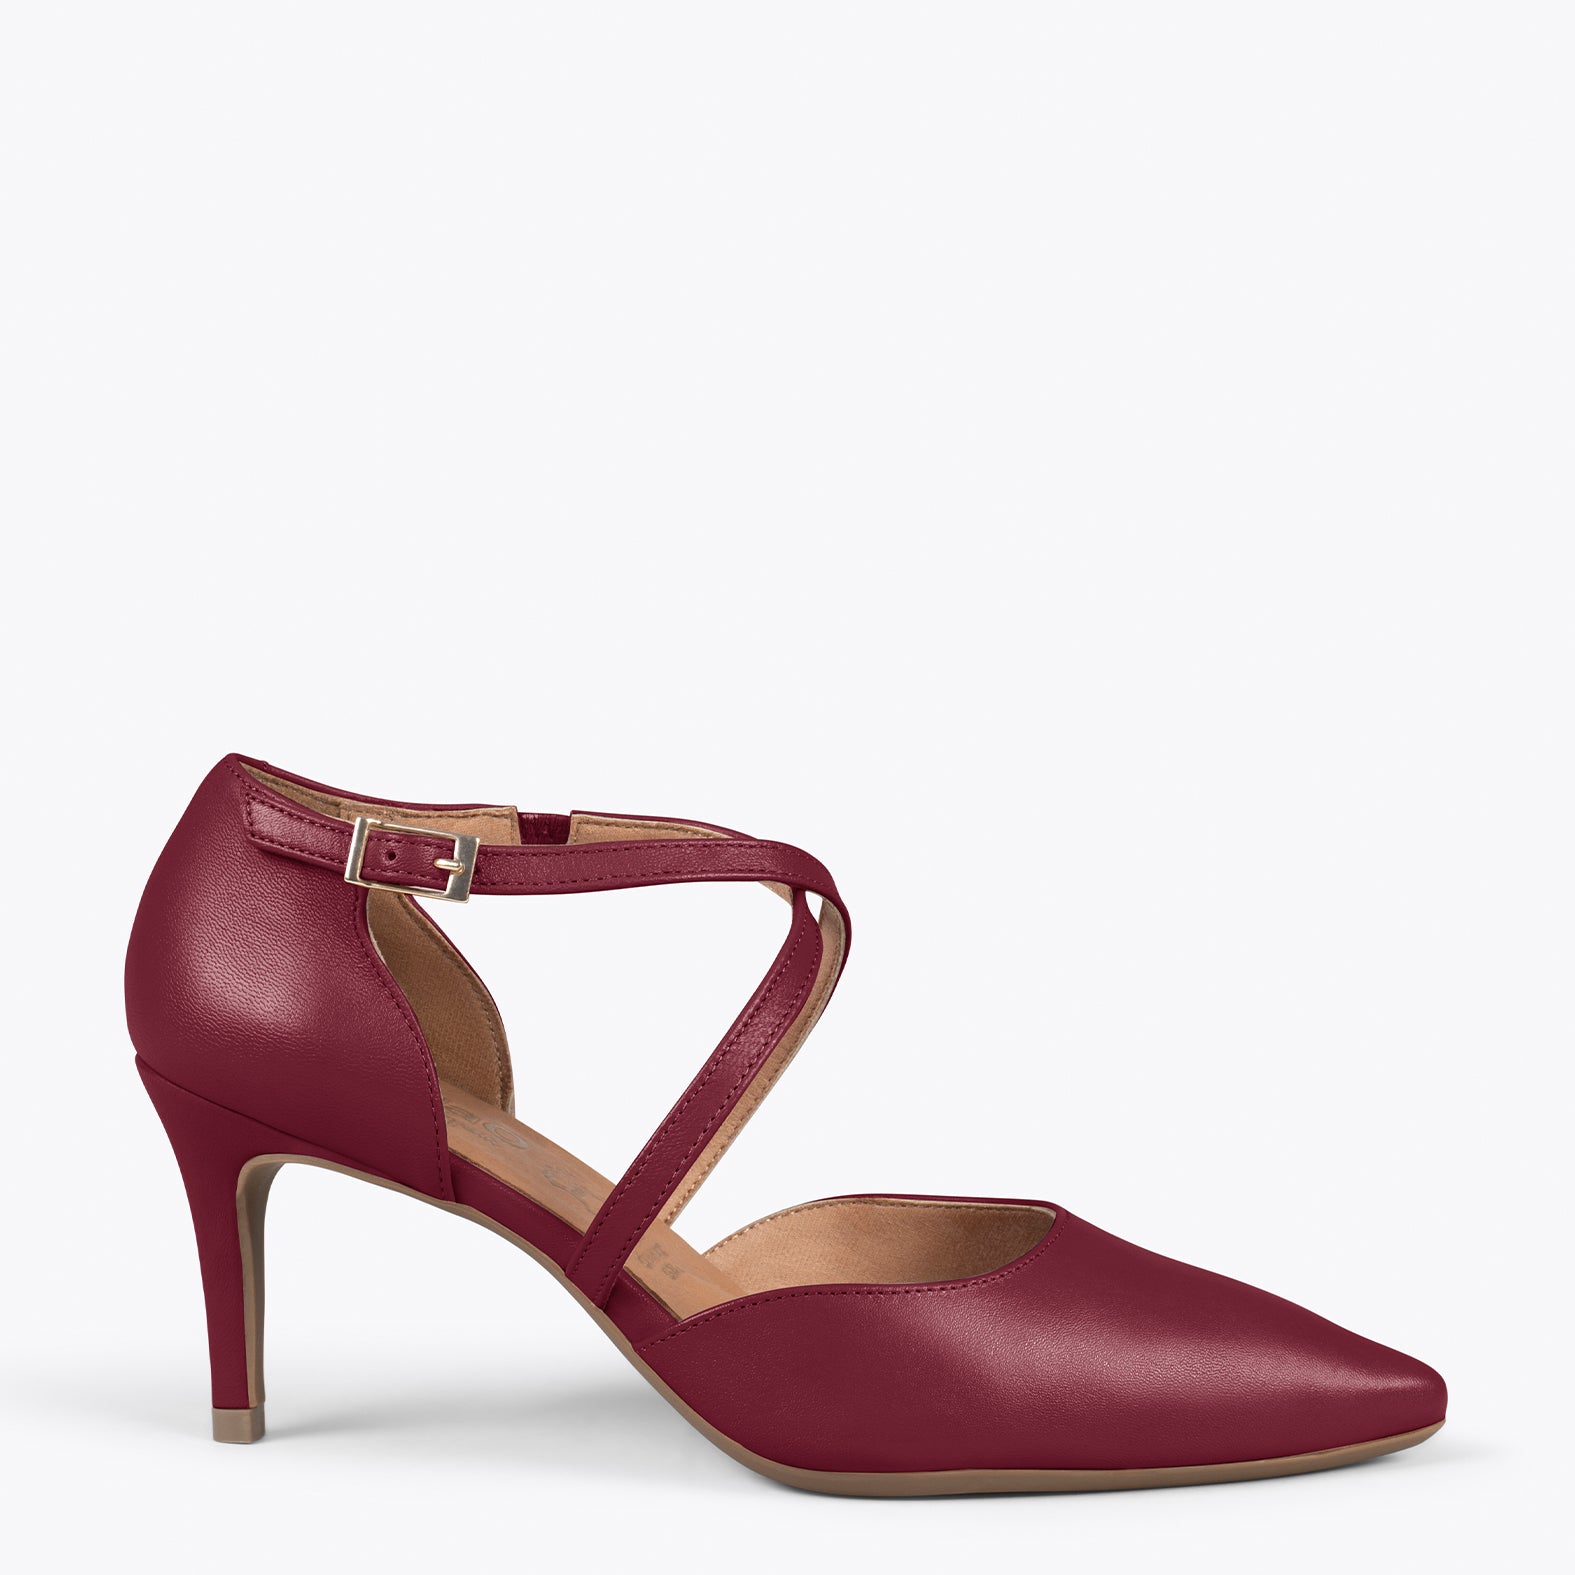 COCKTAIL - BURGUNDY elegant high heel stilettos